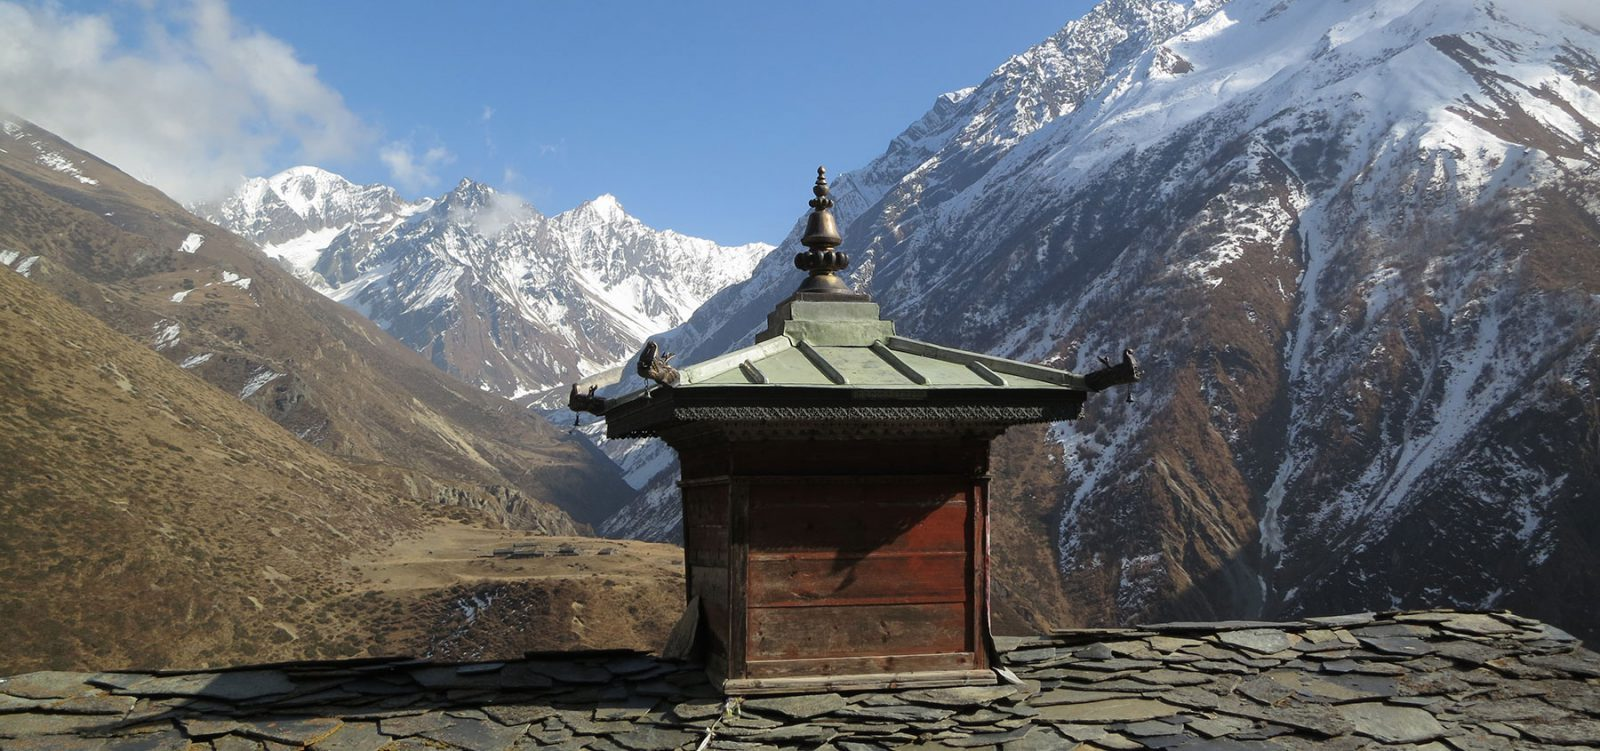 Trek Nepal